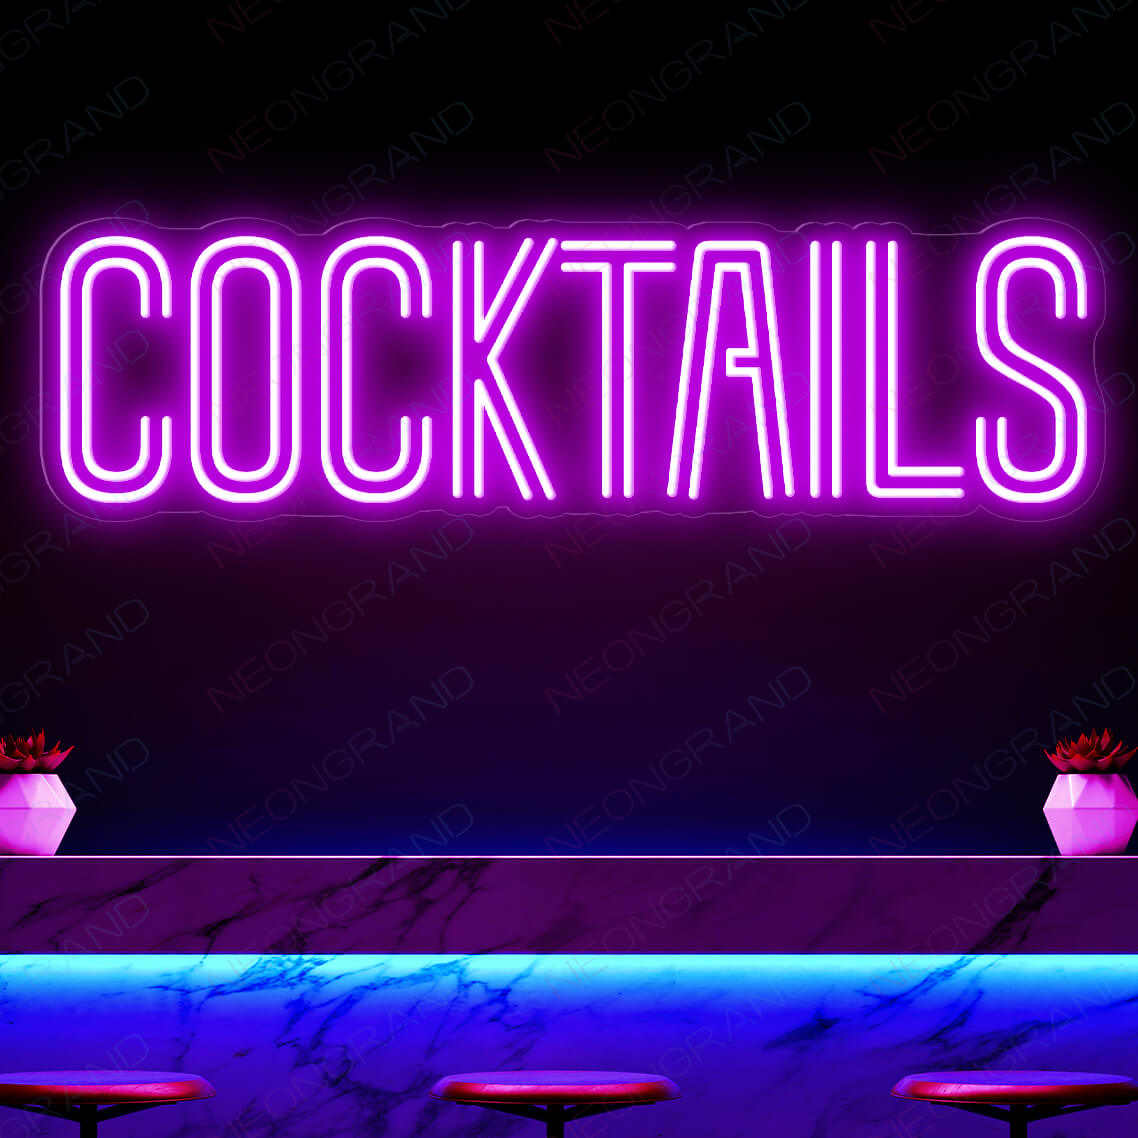 Cocktails Neon Sign Bar Led Light purple